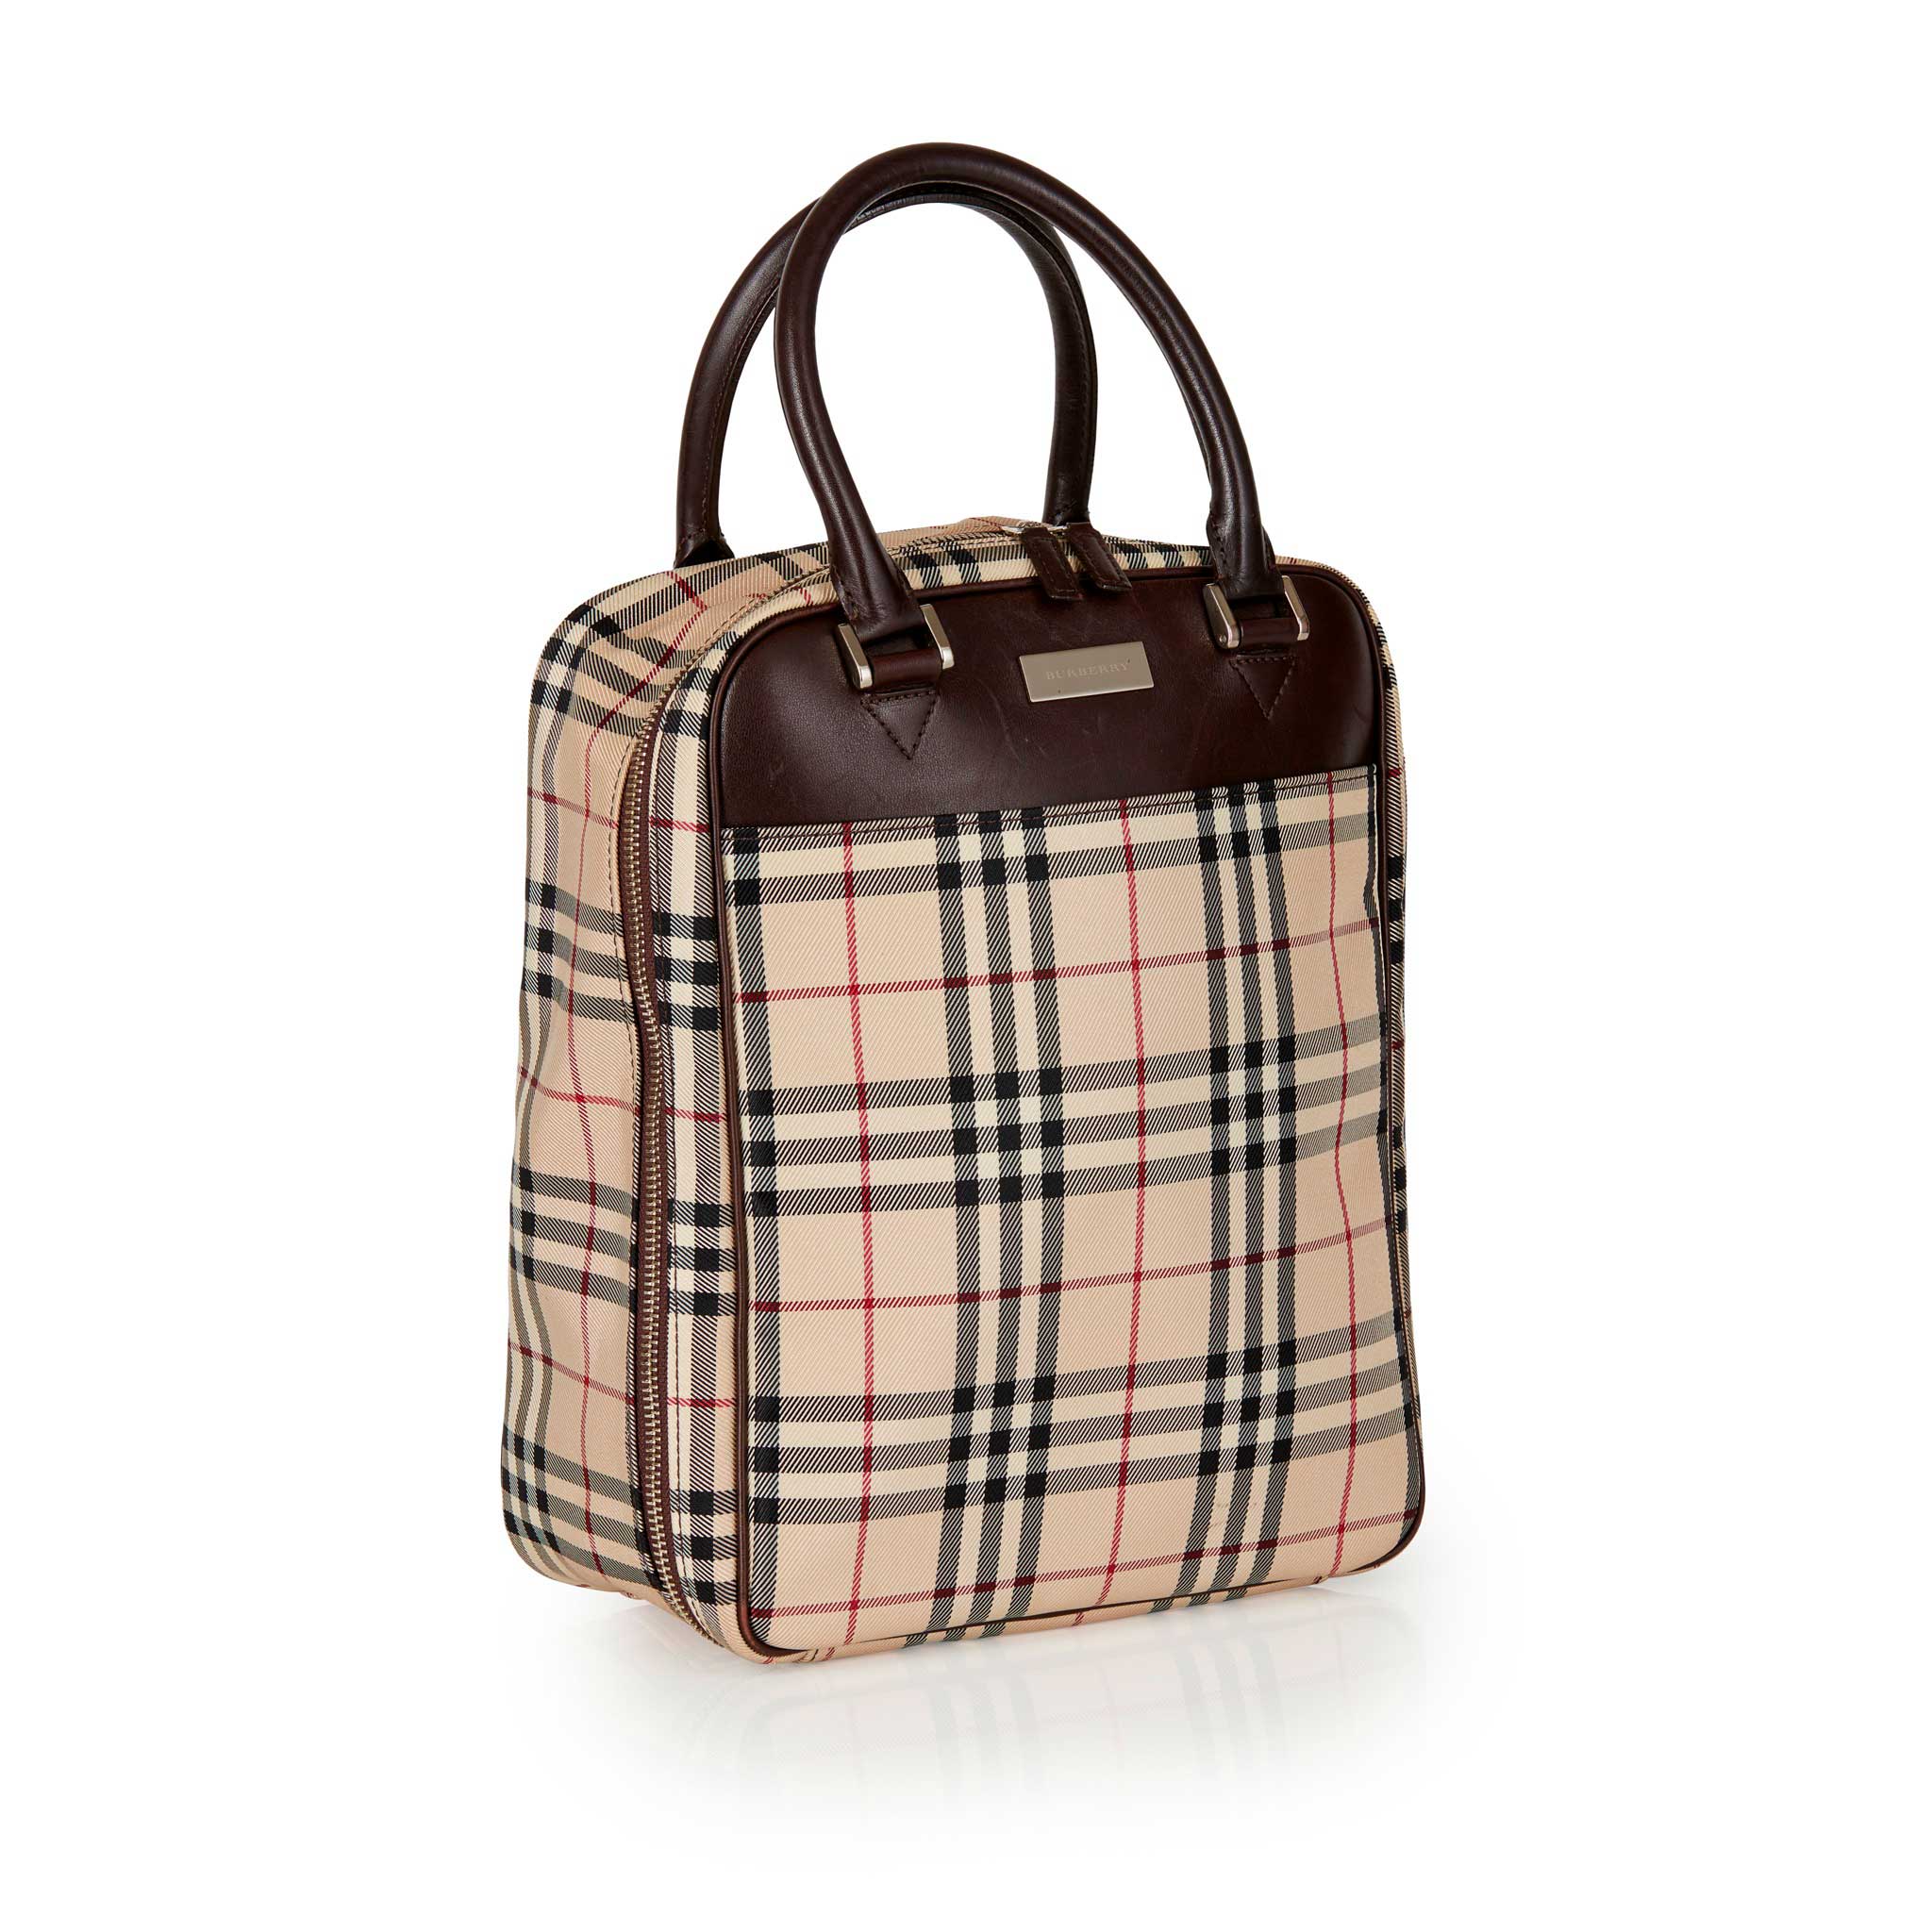 Burberry Handbag Auctions | Lyon & Turnbull